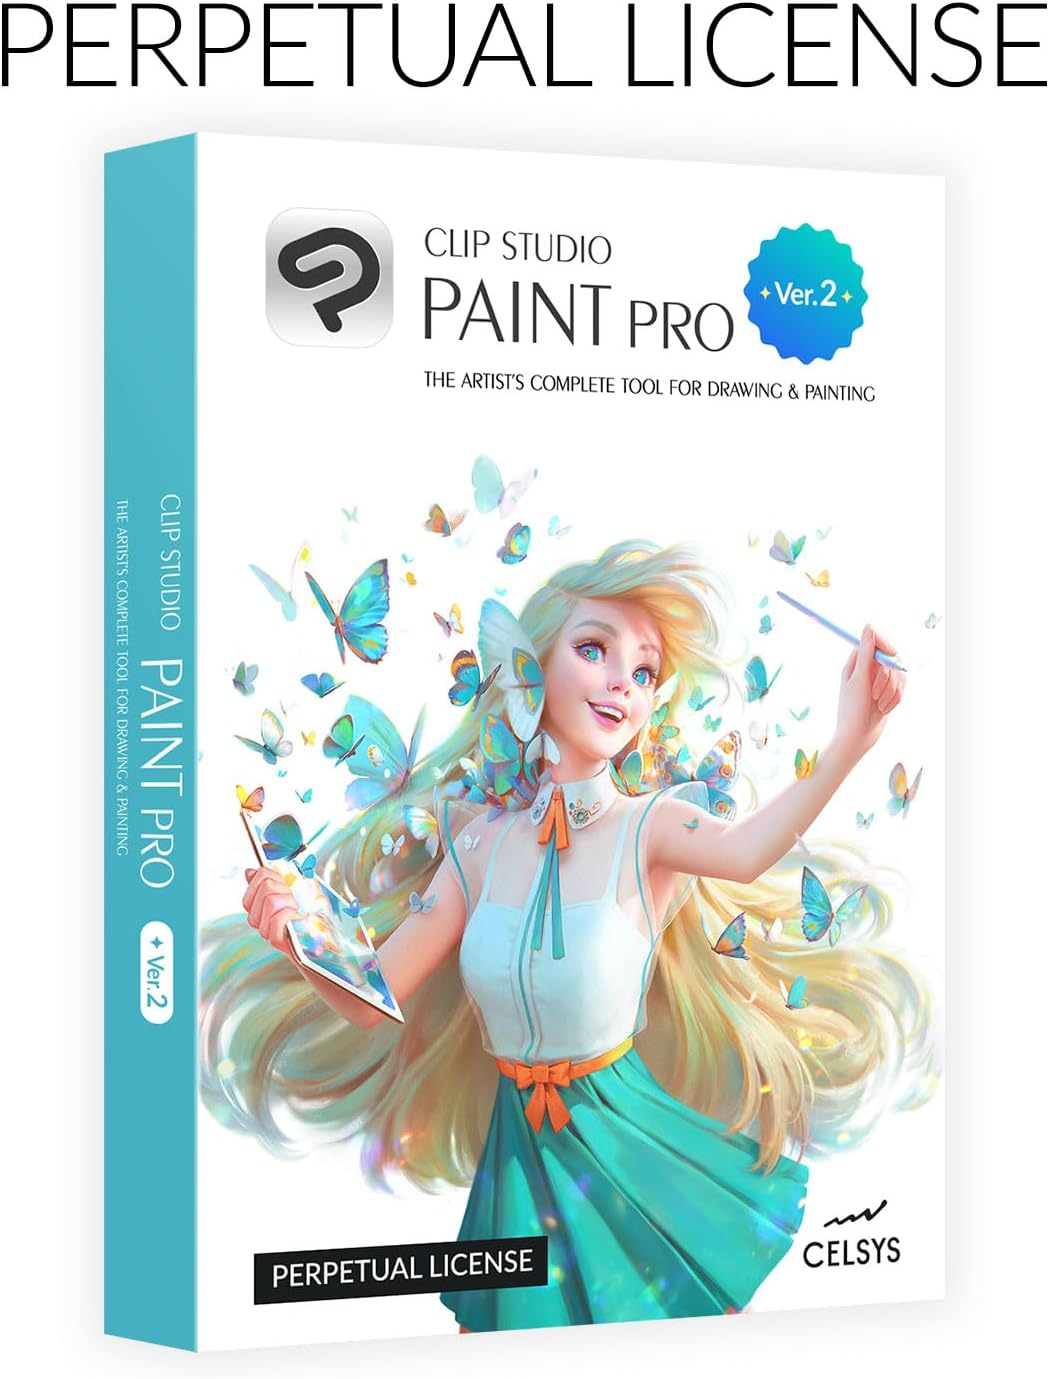 Clip Studio Paint Pro - Version 2 Perpetual License